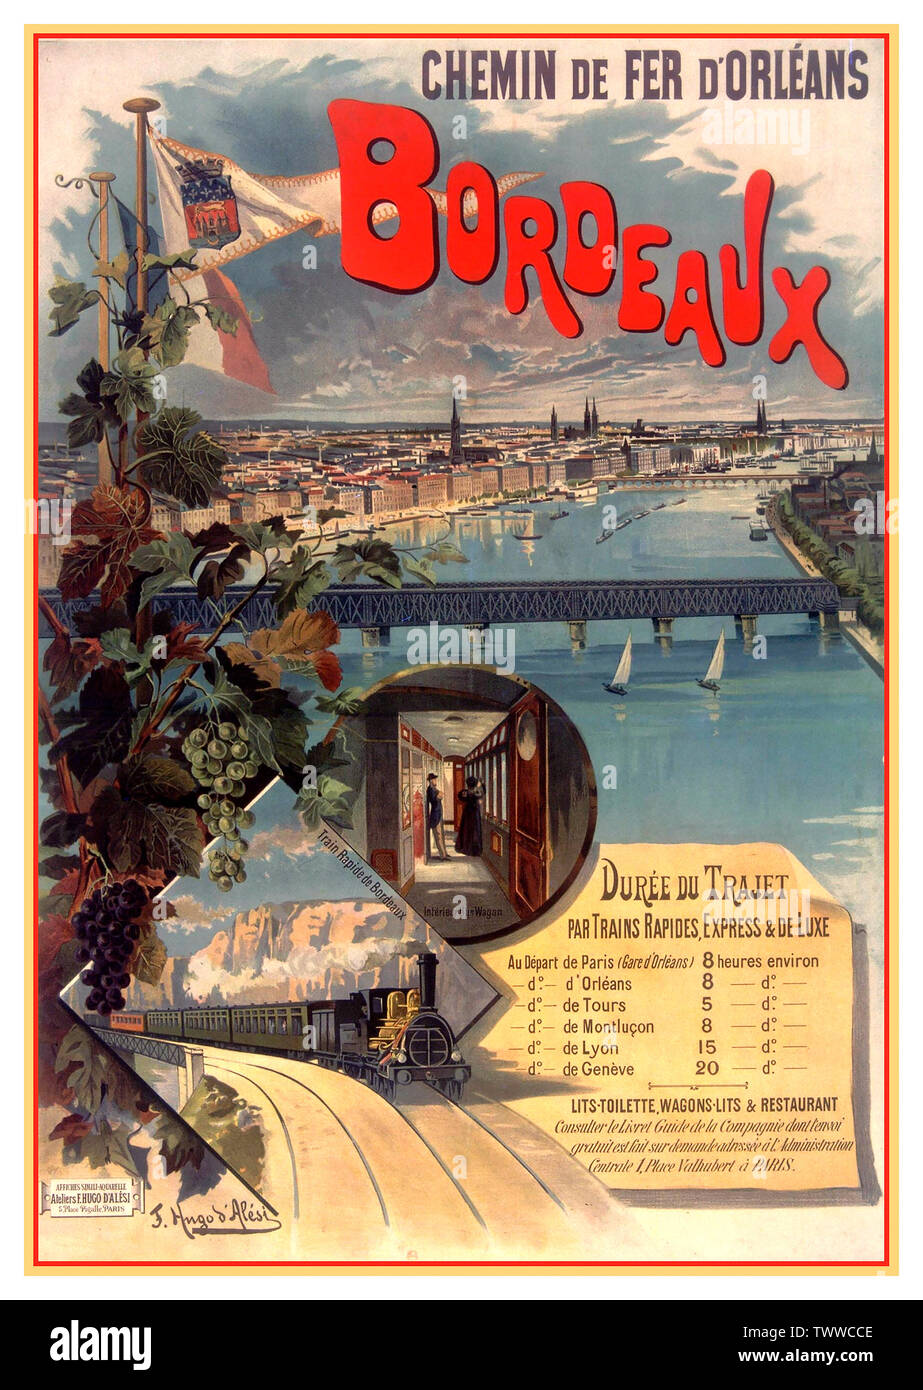 Vintage 1890's poster publicitario del ferrocarril francés de "Chemin de fer d'Orléans" (Ferrocarriles de Orleans') que une París a Burdeos en 8 horas en 1897 Francia Foto de stock